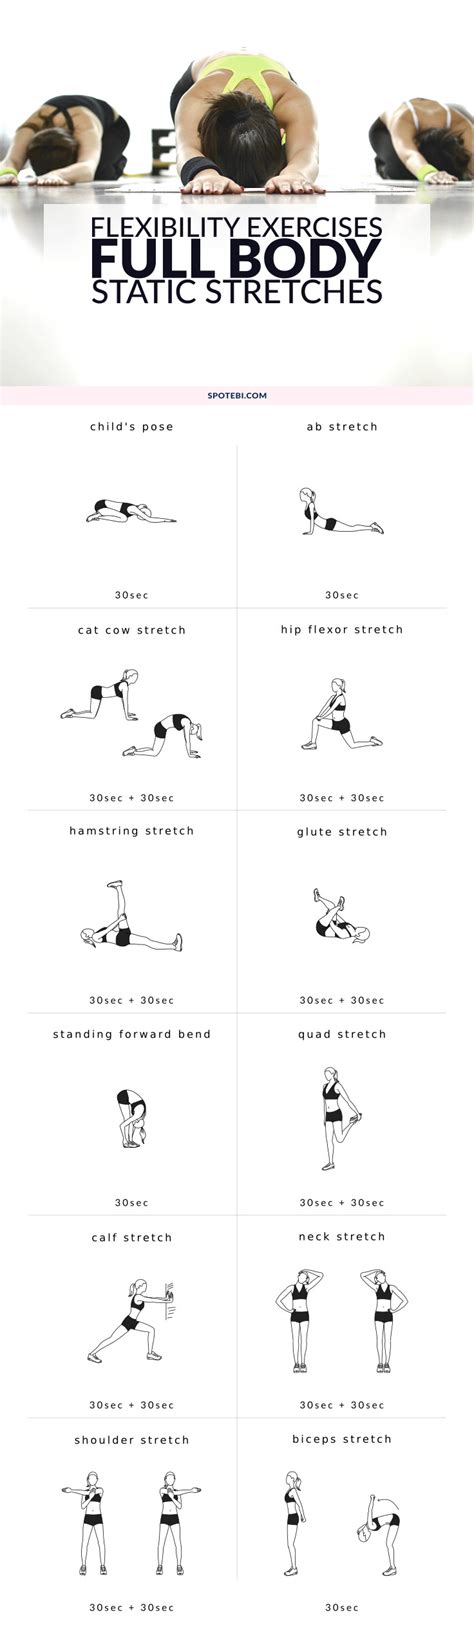 Flexibility Exercises Full Body Static Stretches